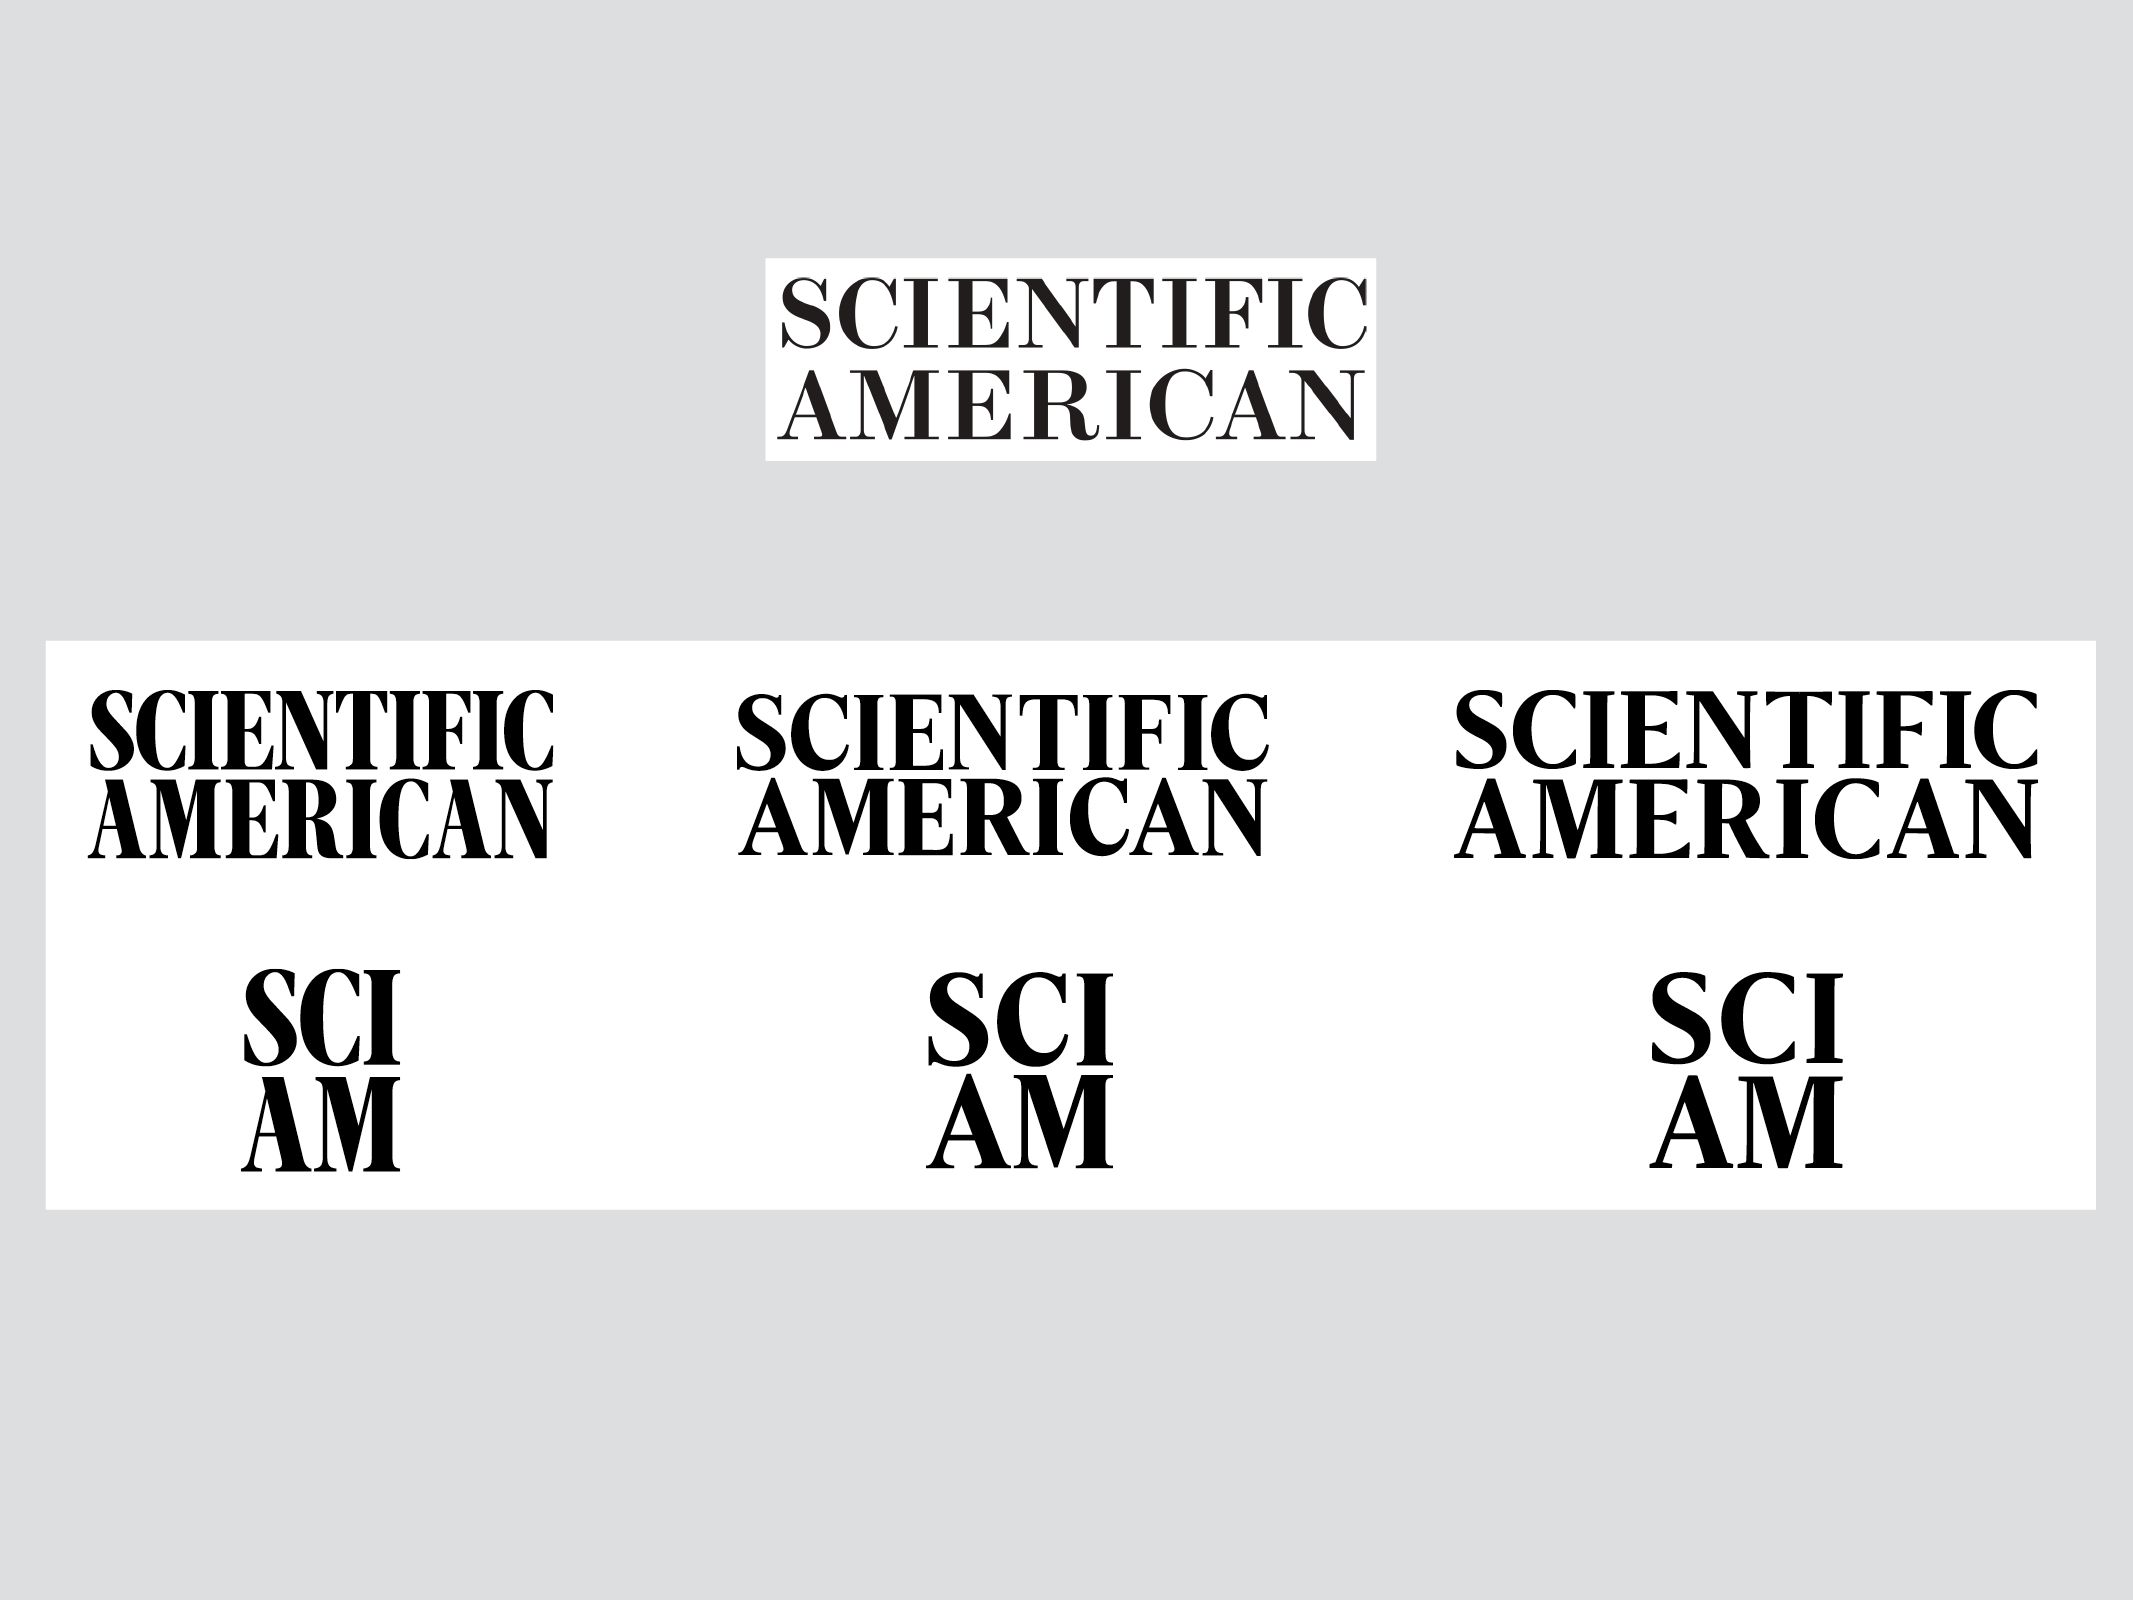 Seven different Scientific American logos